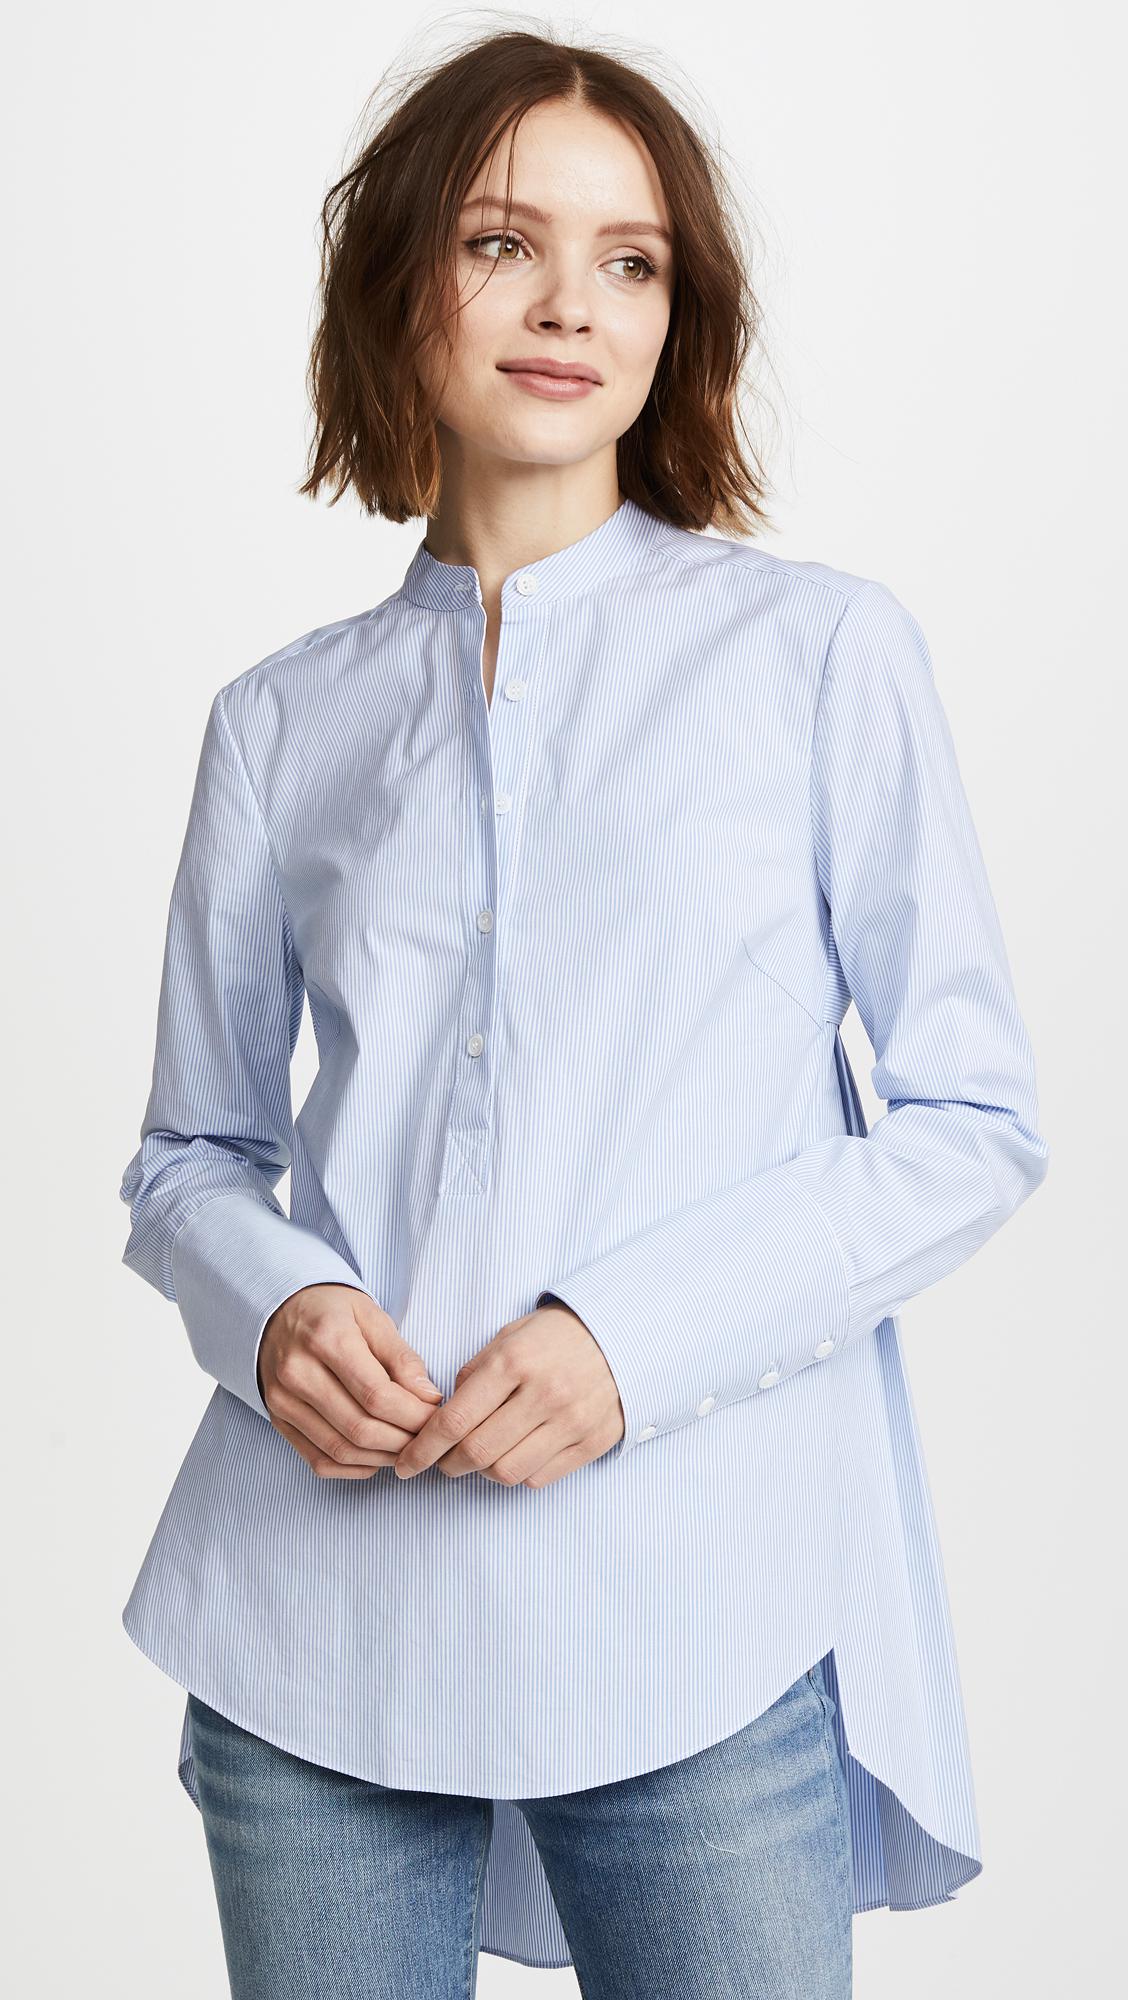 Lyst - Veronica Beard Greer Shirt in Blue